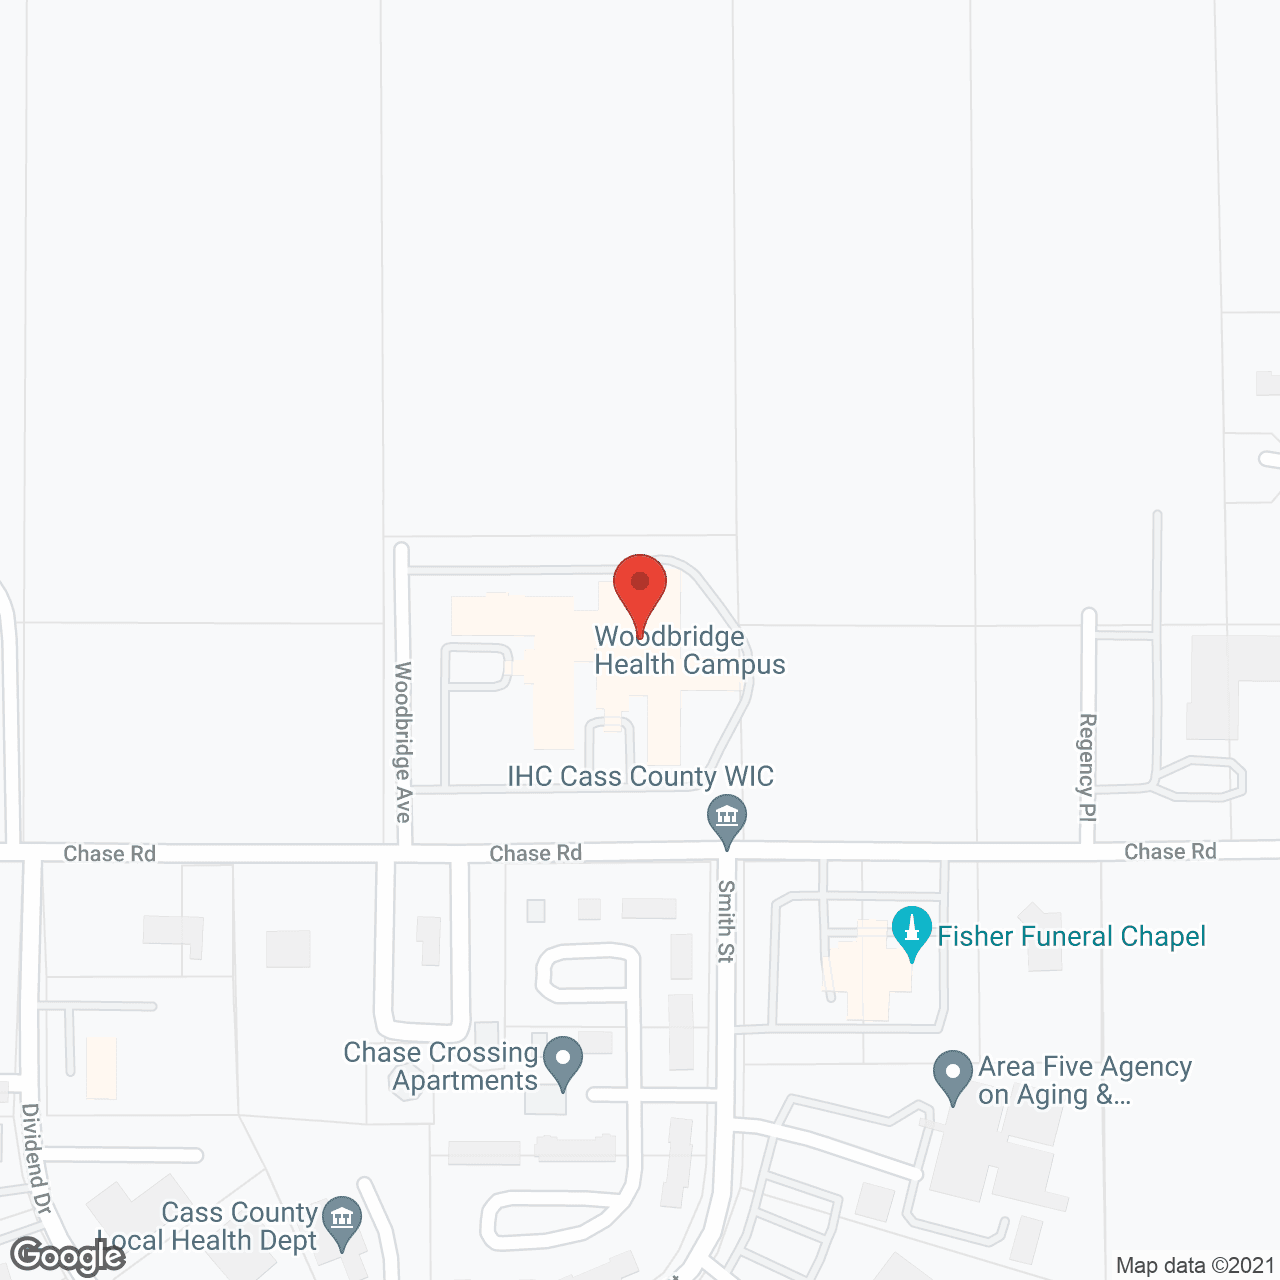 WoodBridge Health Campus in google map